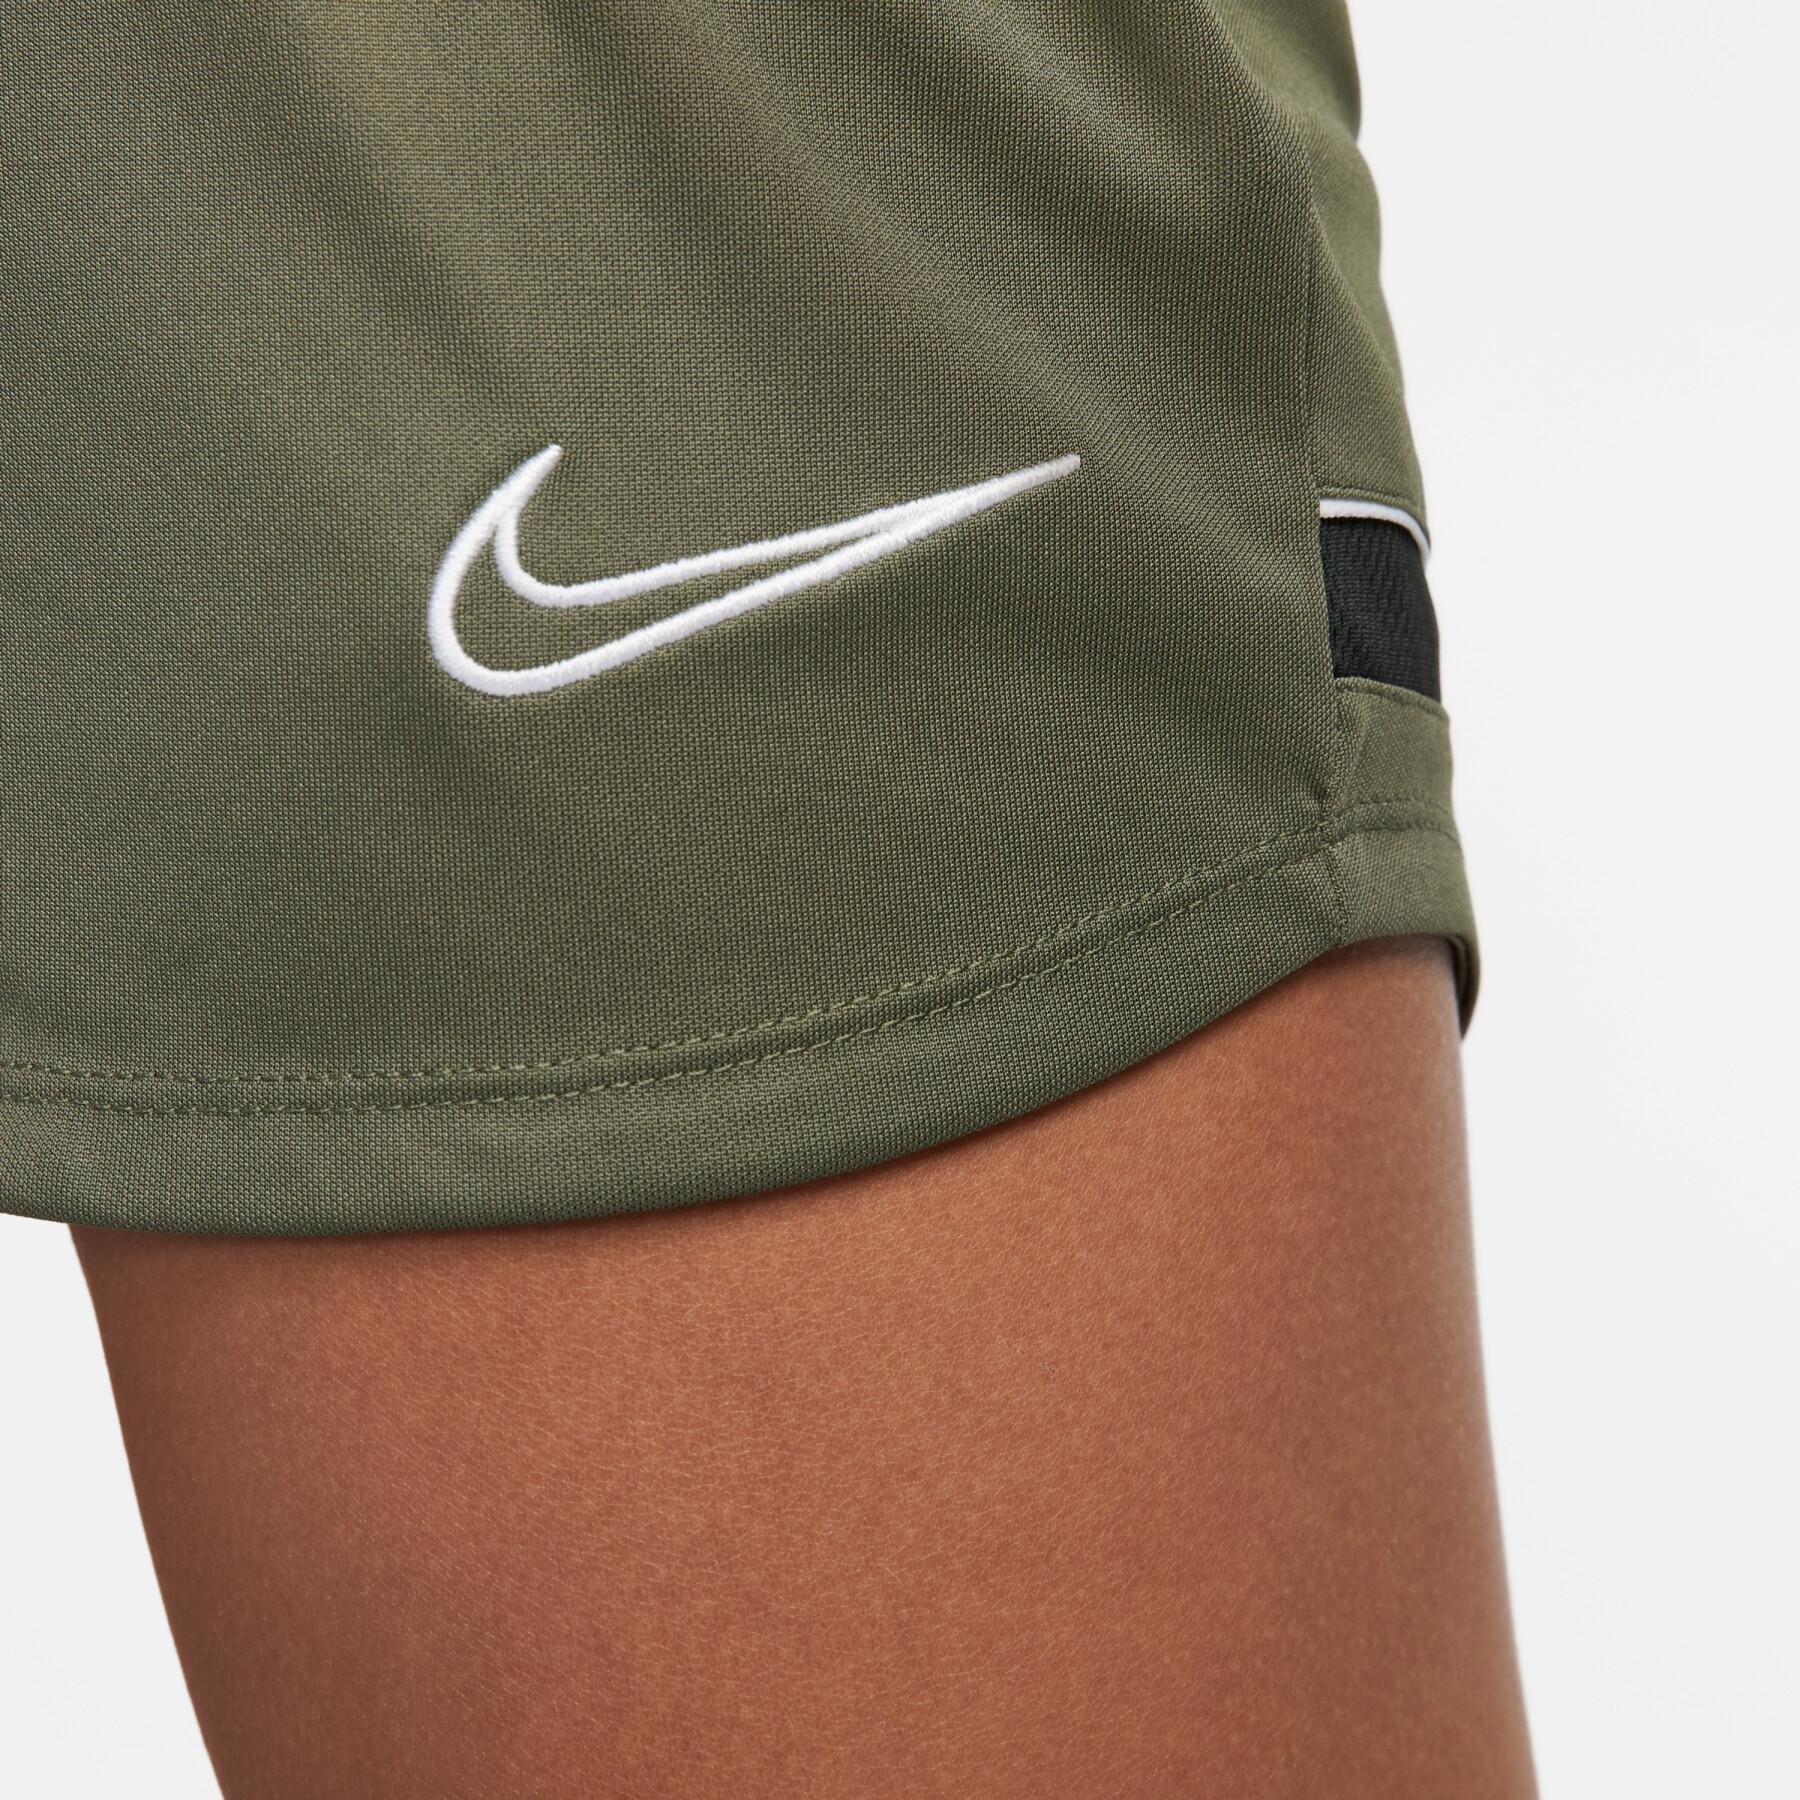 Women's shorts Nike Dri-Fit Academy